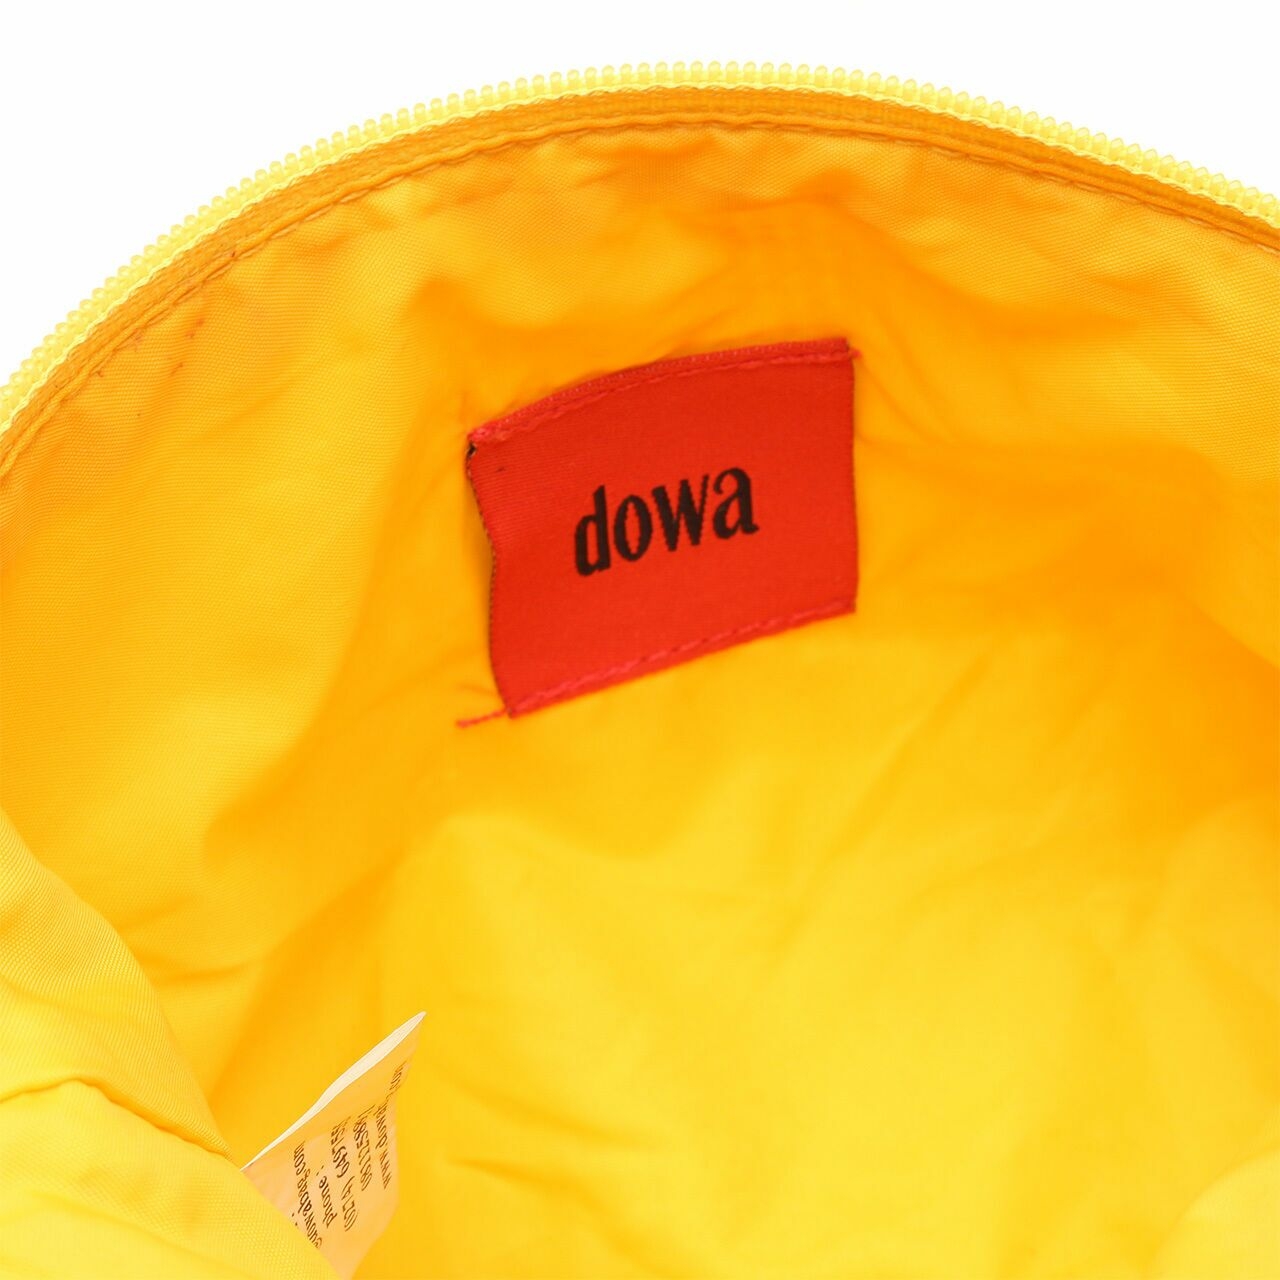 DOWA Yellow Pouch